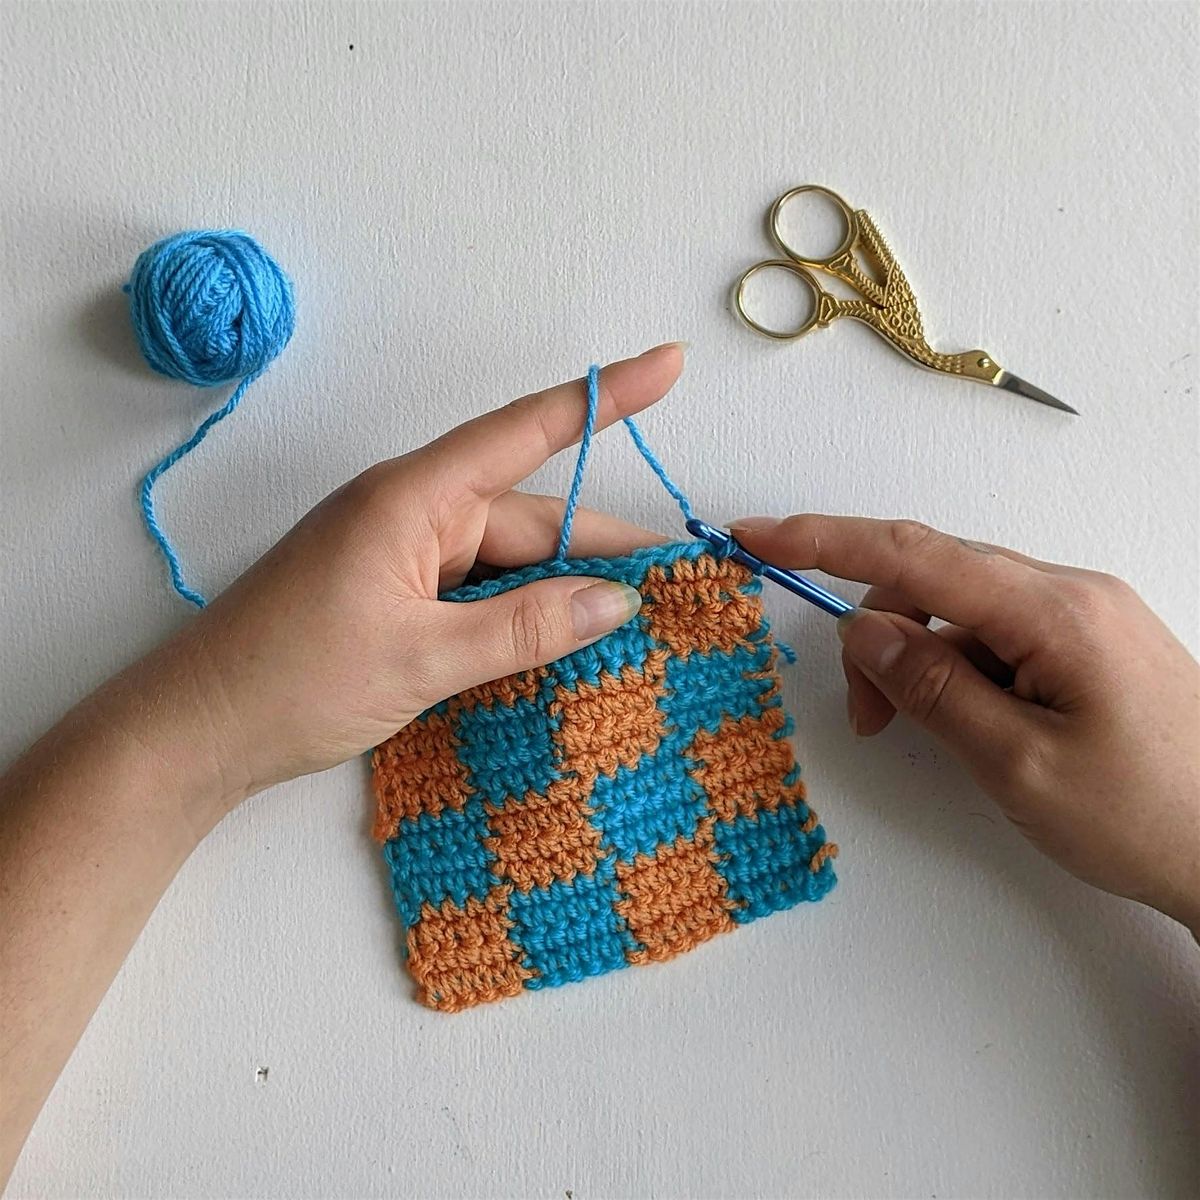 Crochet Fundamentals with Cathy Van Hear